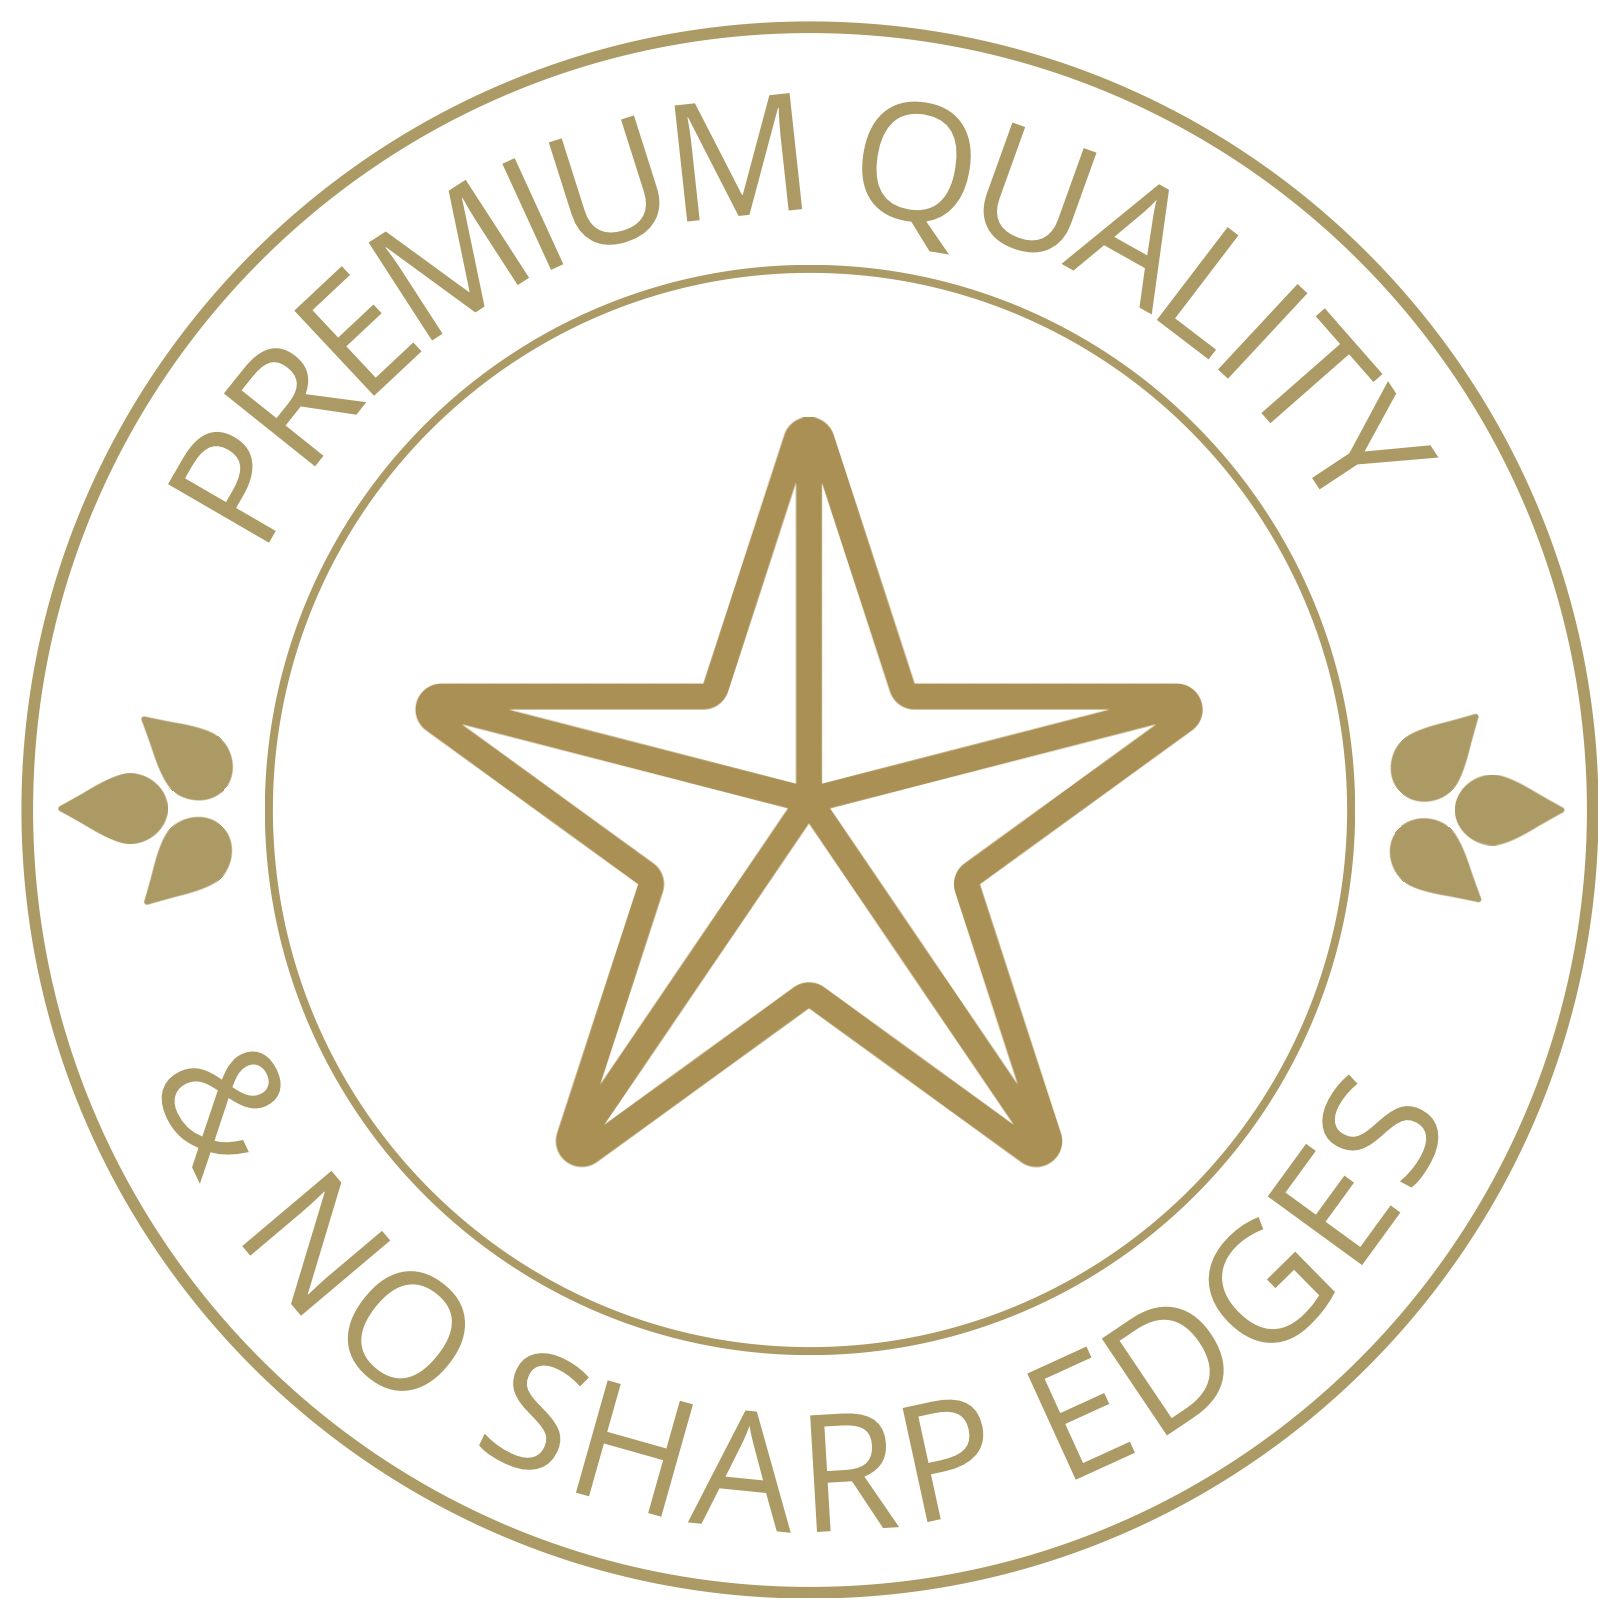 Premium Quality & No Sharp Edges